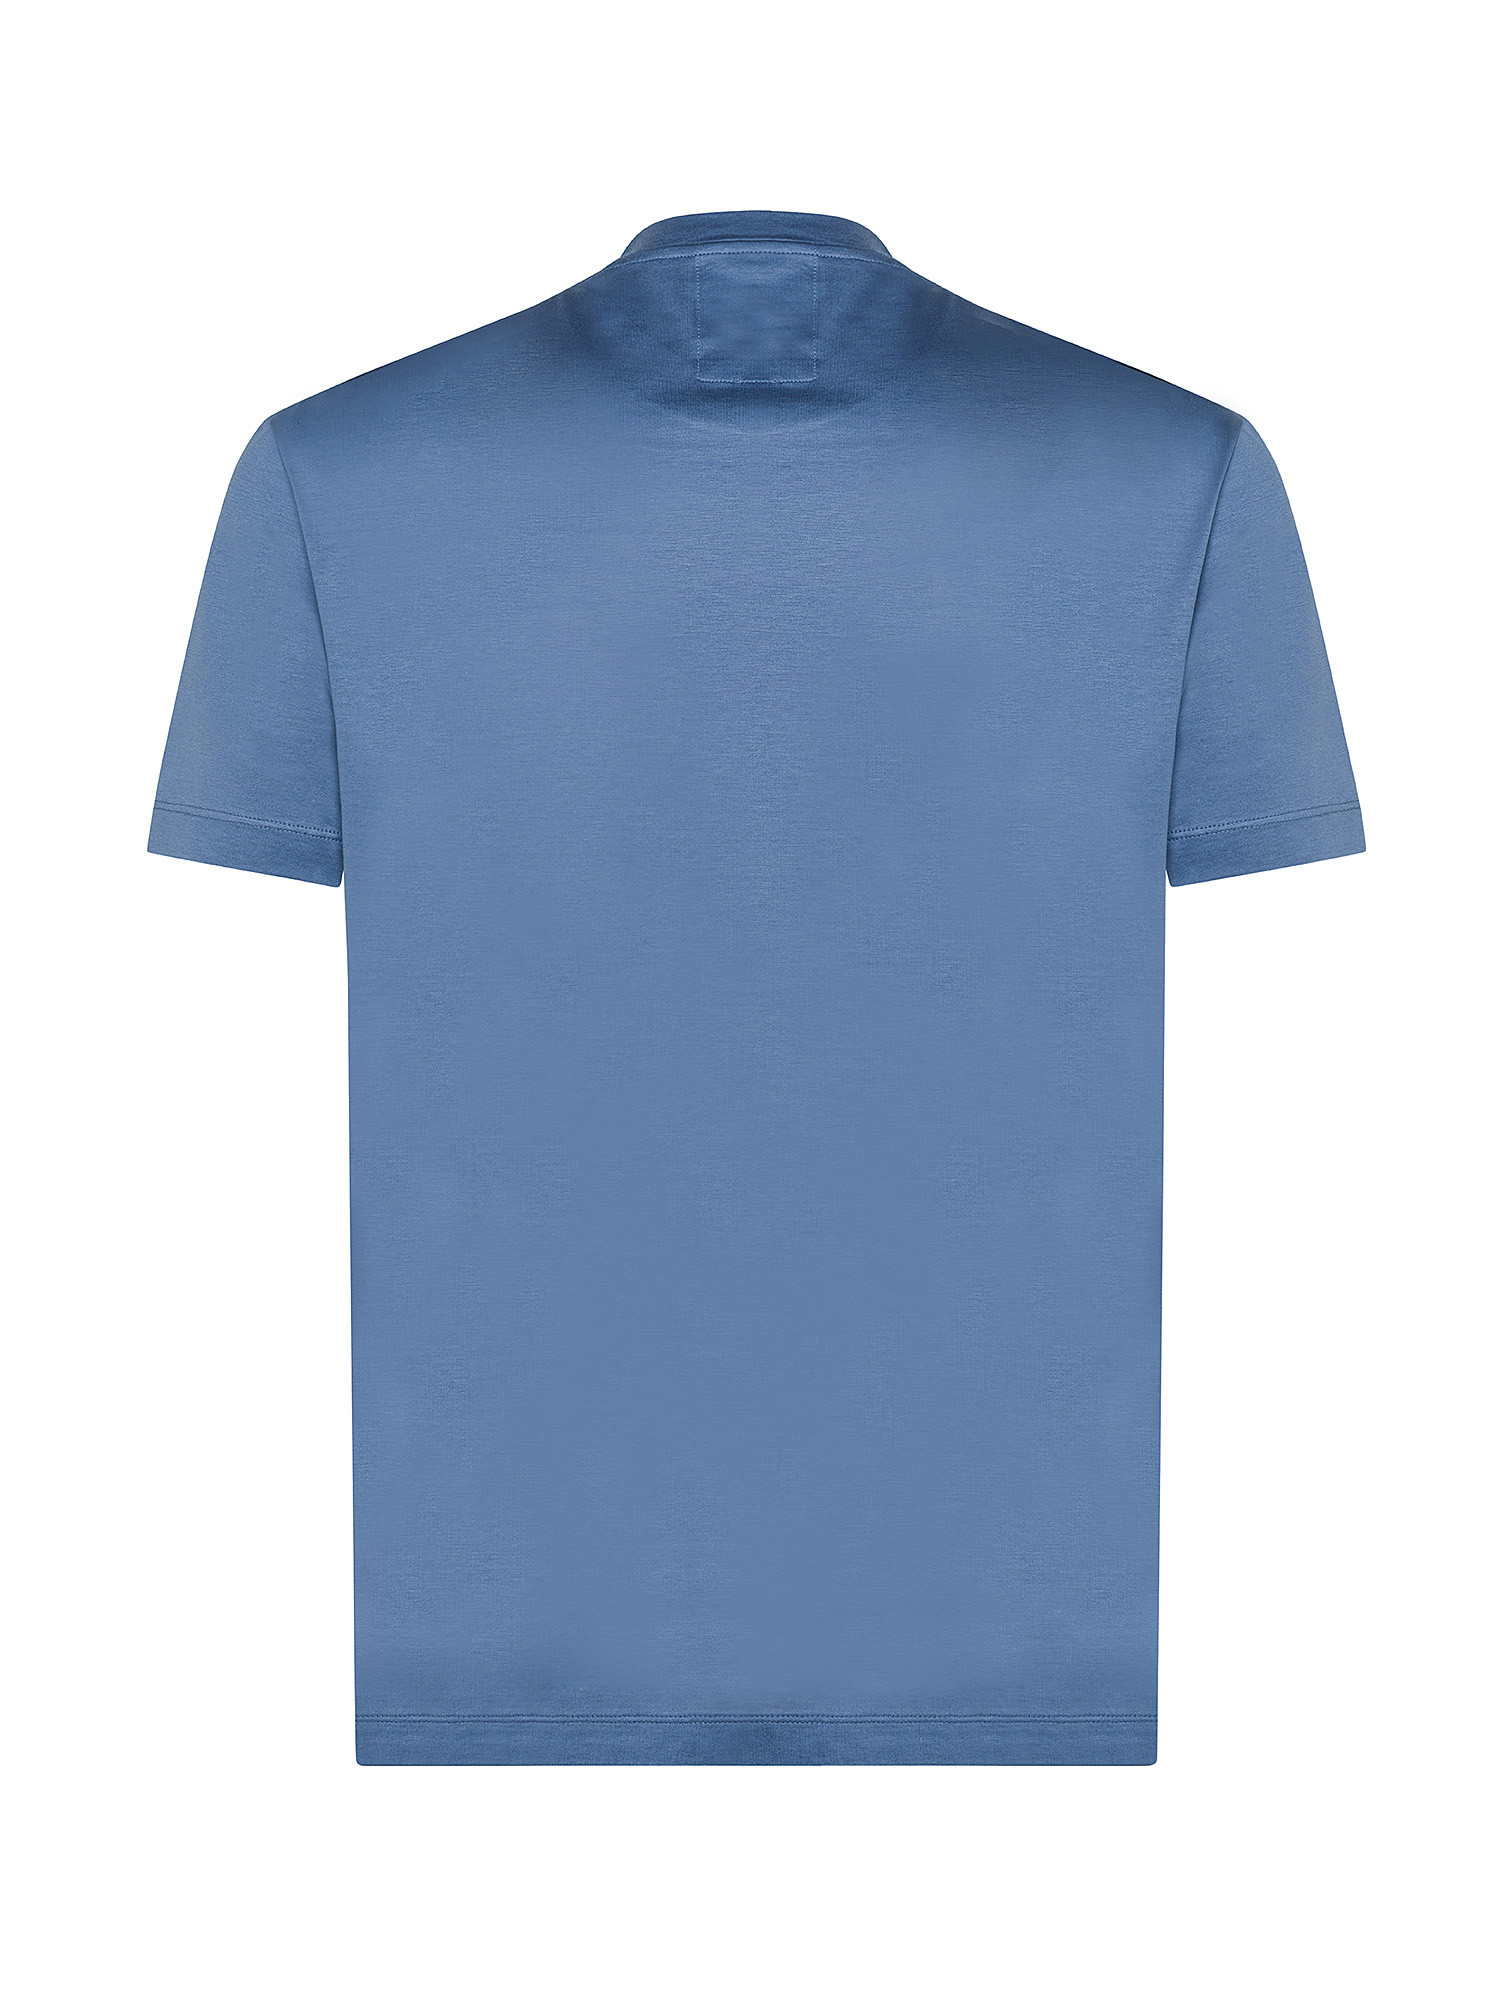 Emporio Armani - T-shirt con logo lettering, Azzurro scuro, large image number 1